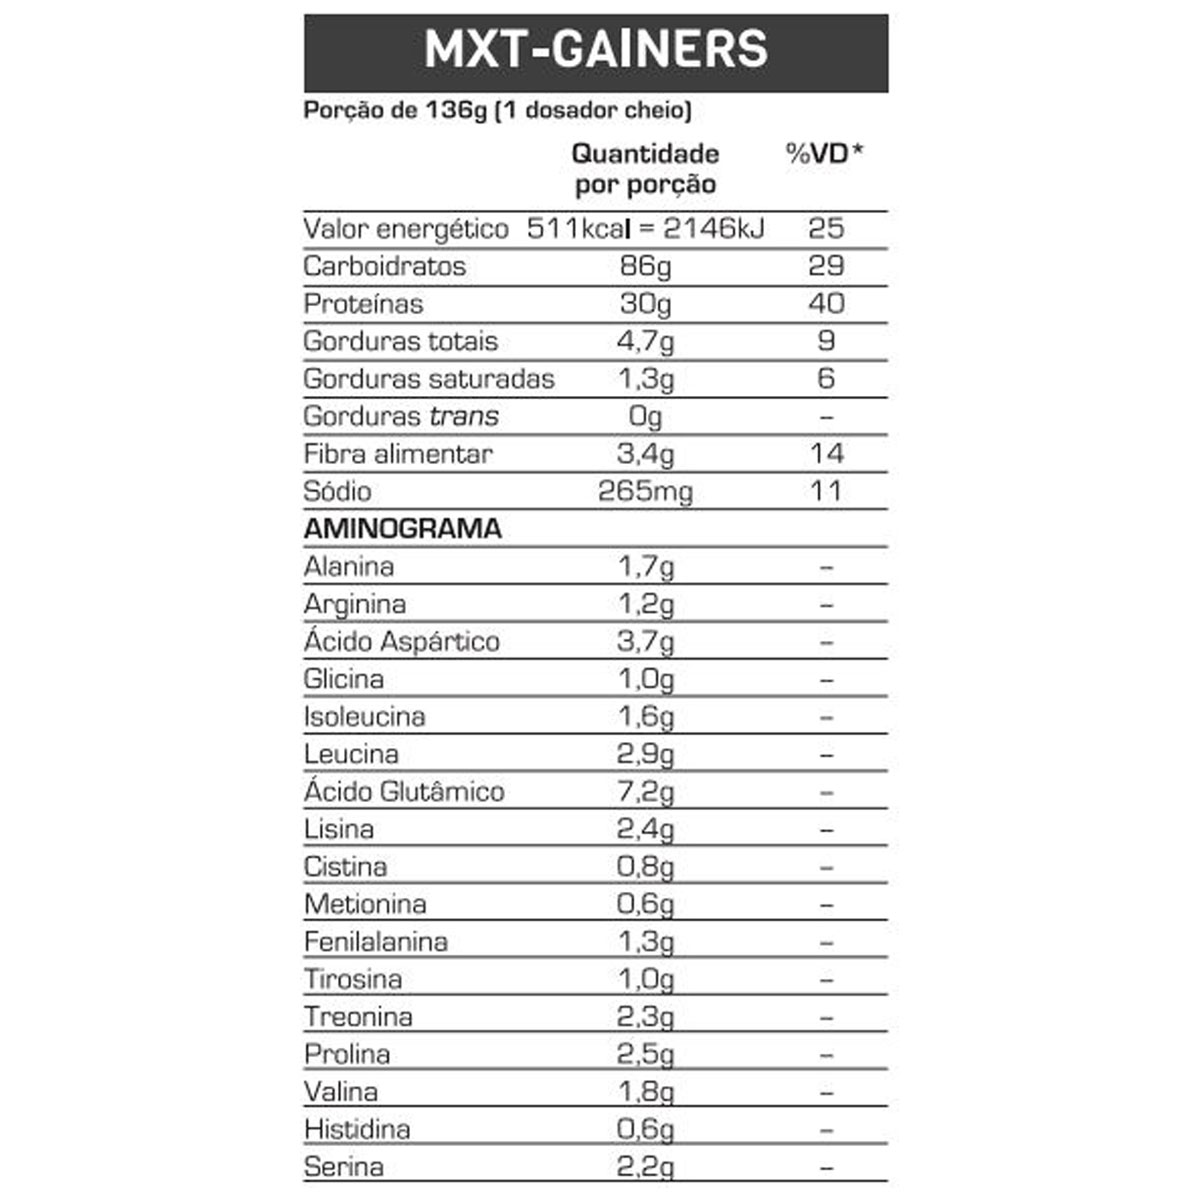 TopWay Suplementos - TopWay Suplementos - MXT Gainers 3 kg - Massa - Max Titanium - Tabela Nutricional